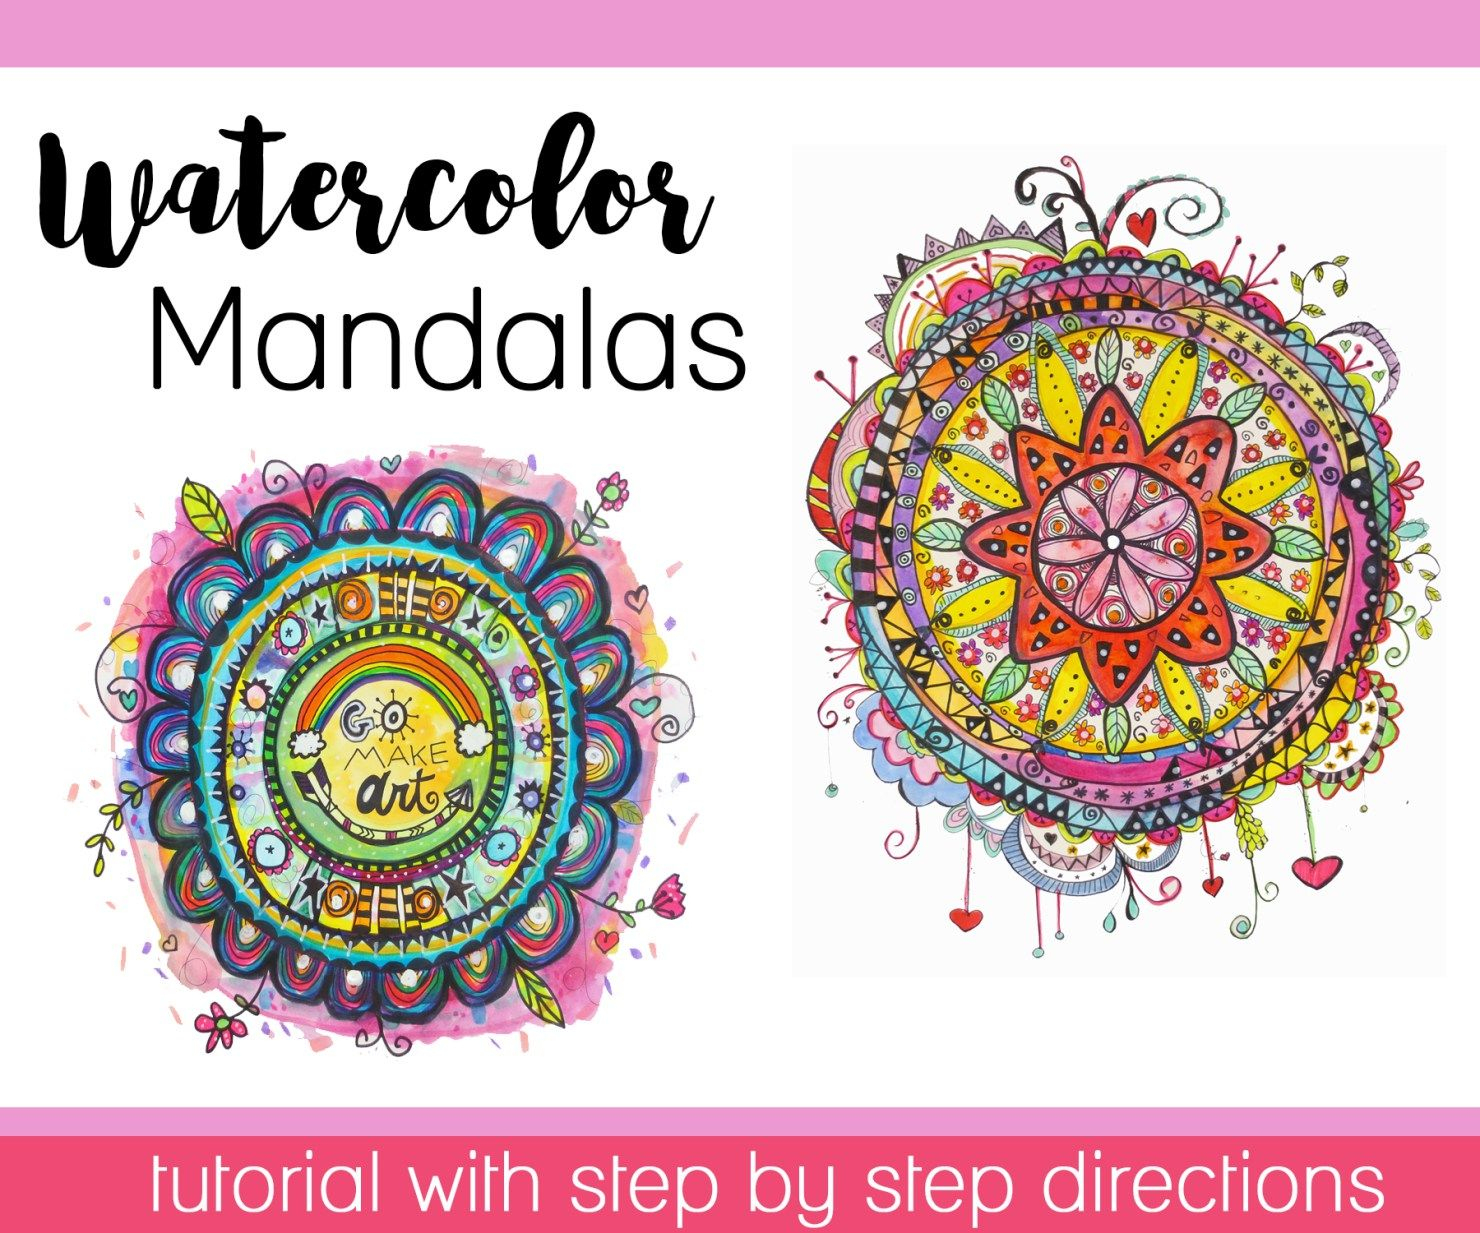 How To Make A Watercolor Mandala | Watercolor Mandala